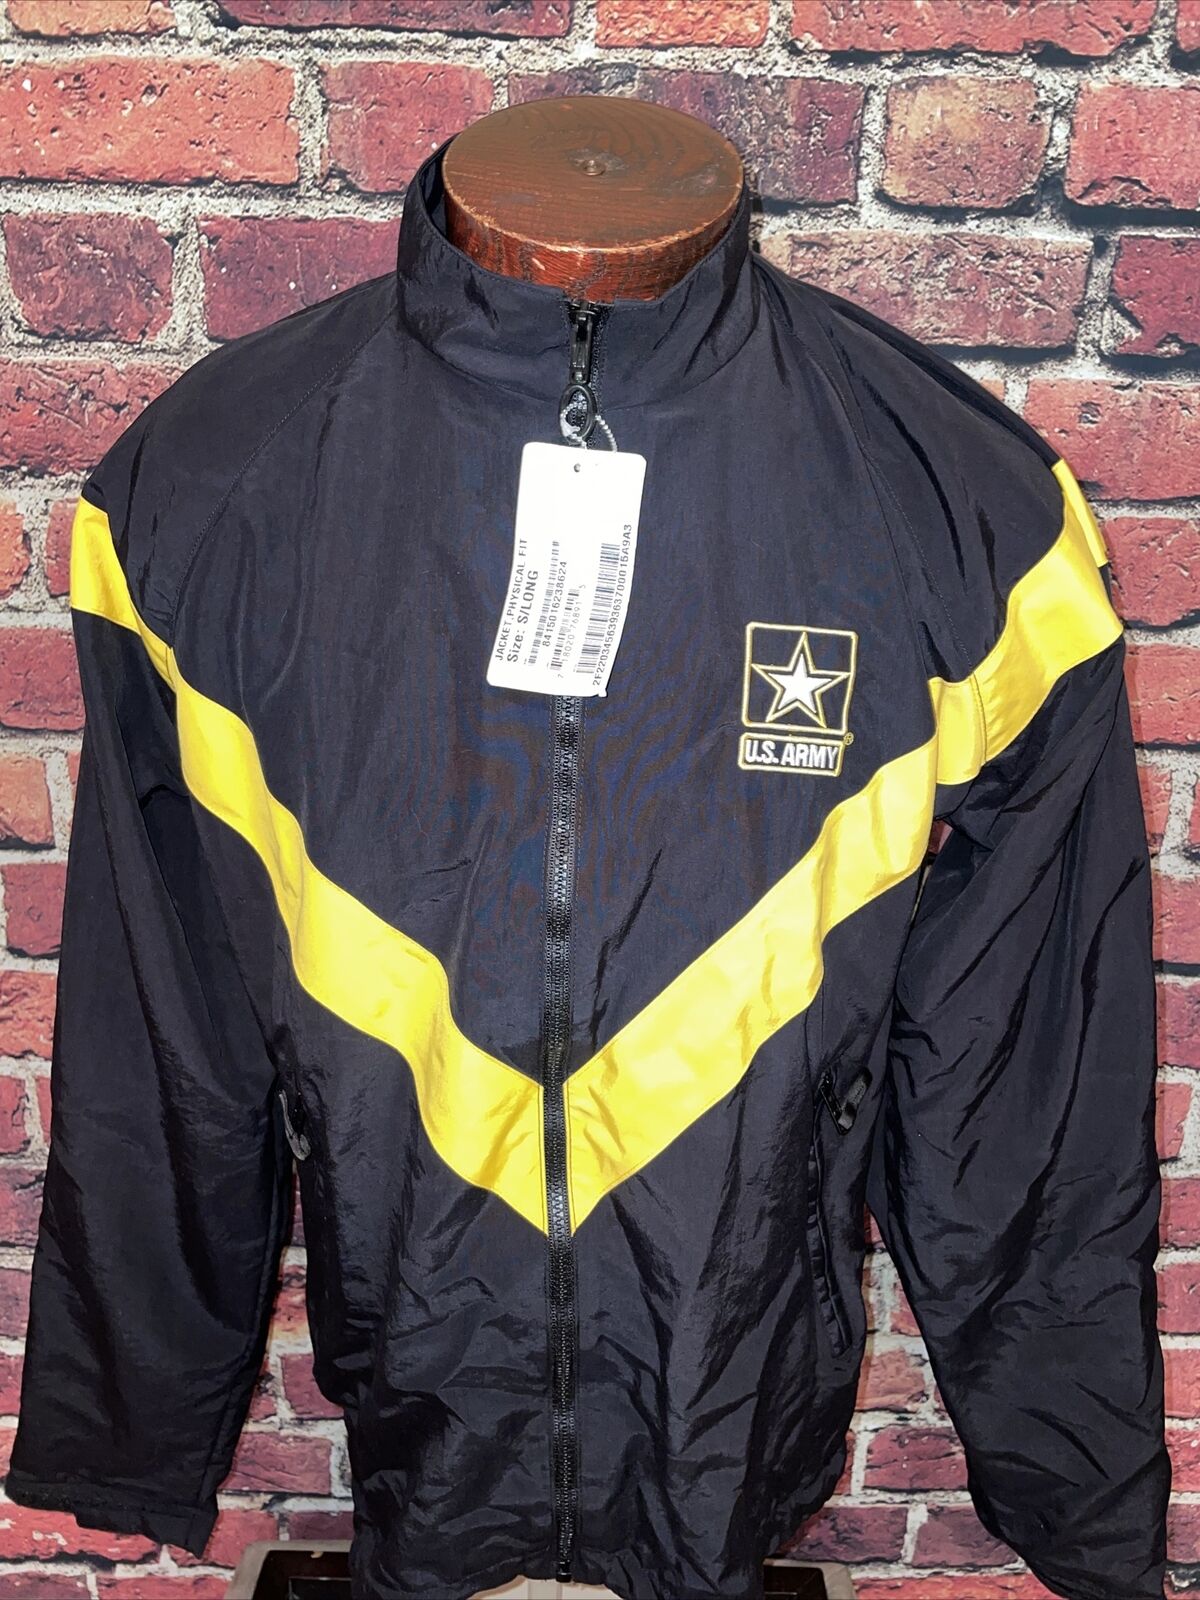 U.S. Army Mens Small Black Yellow Fullzip Longsleeve Jacket 